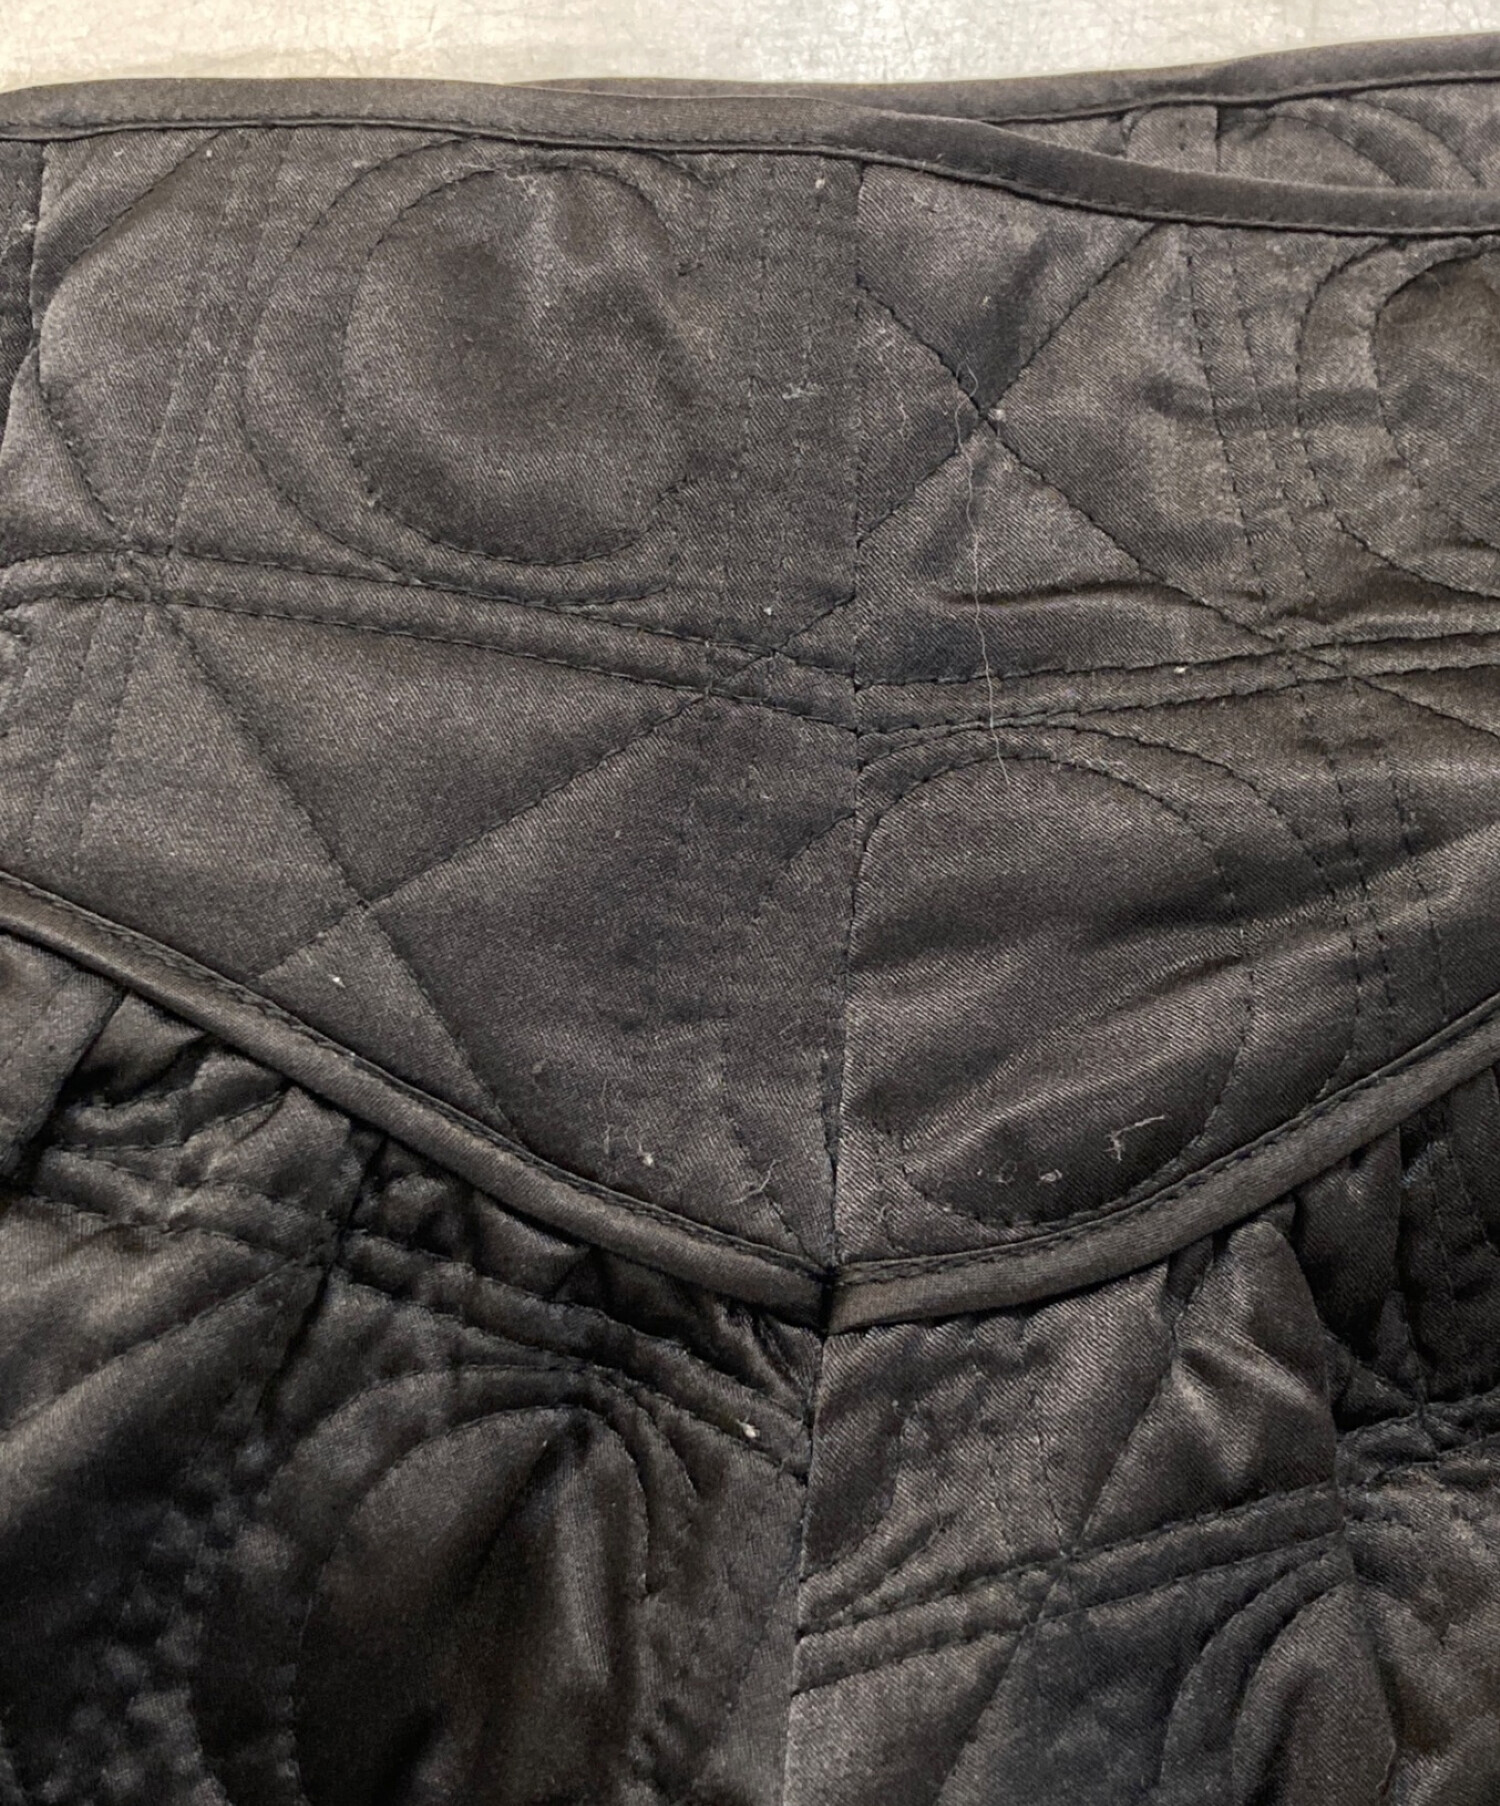 CELFORD (セルフォード) オリジナルキルティングスカート ブラック サイズ:M